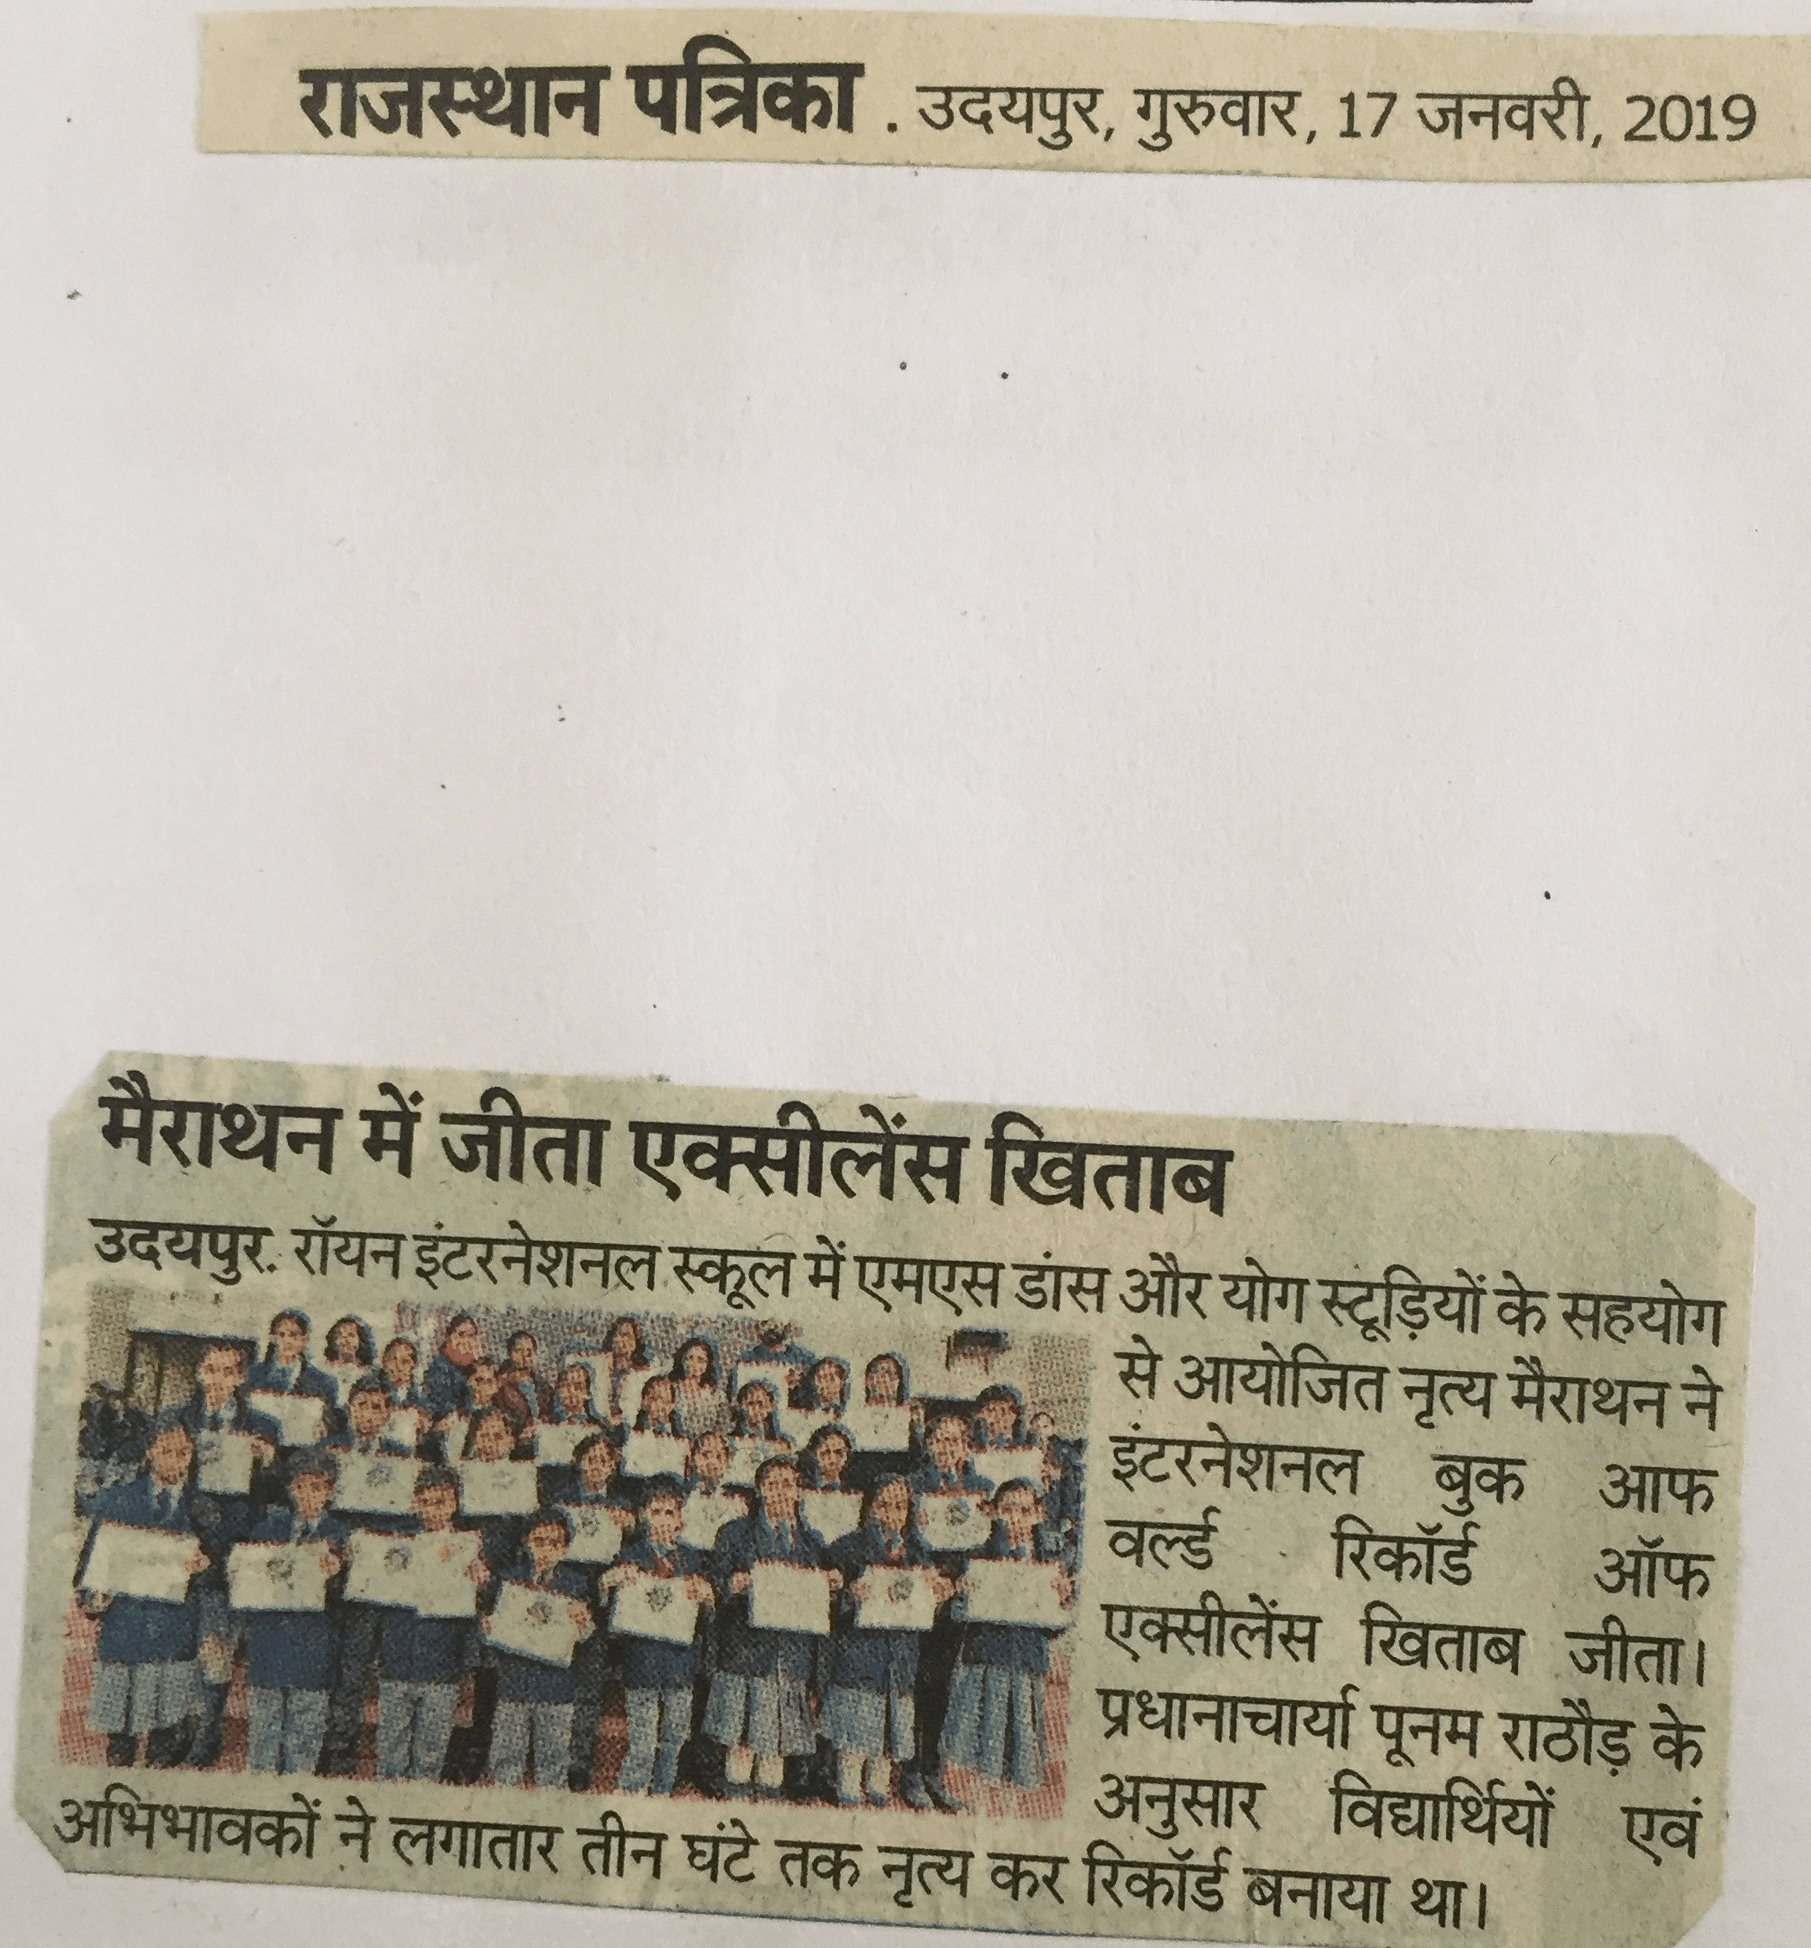 International Book of World Record- Dance Marathon - Ryan international School, Udaipur